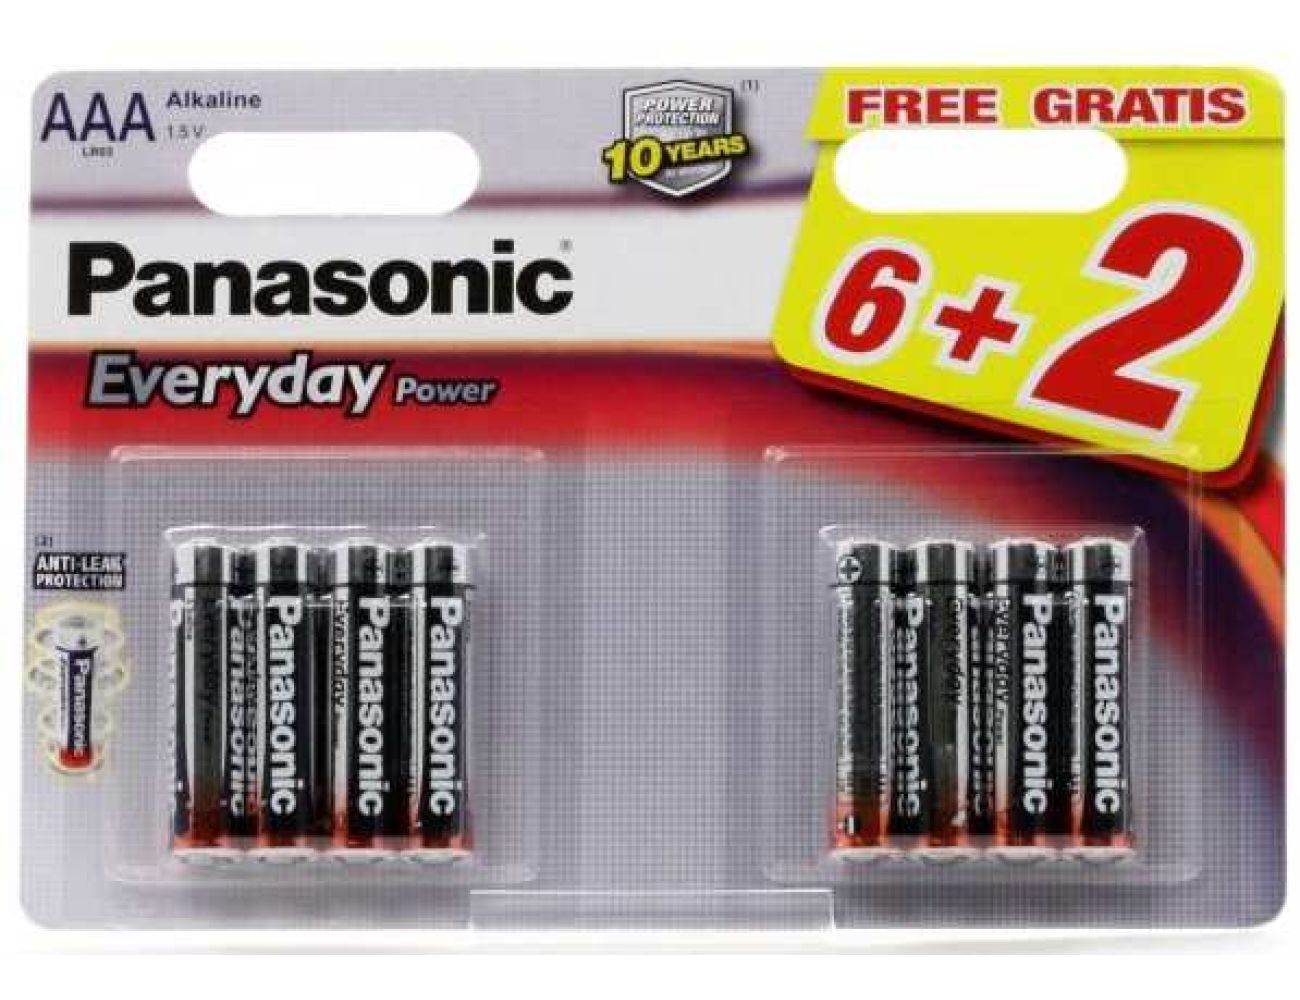 Батарейка ААА Panasonic Everyday Power 6+2 LR03 1.5V alkaline 8 шт